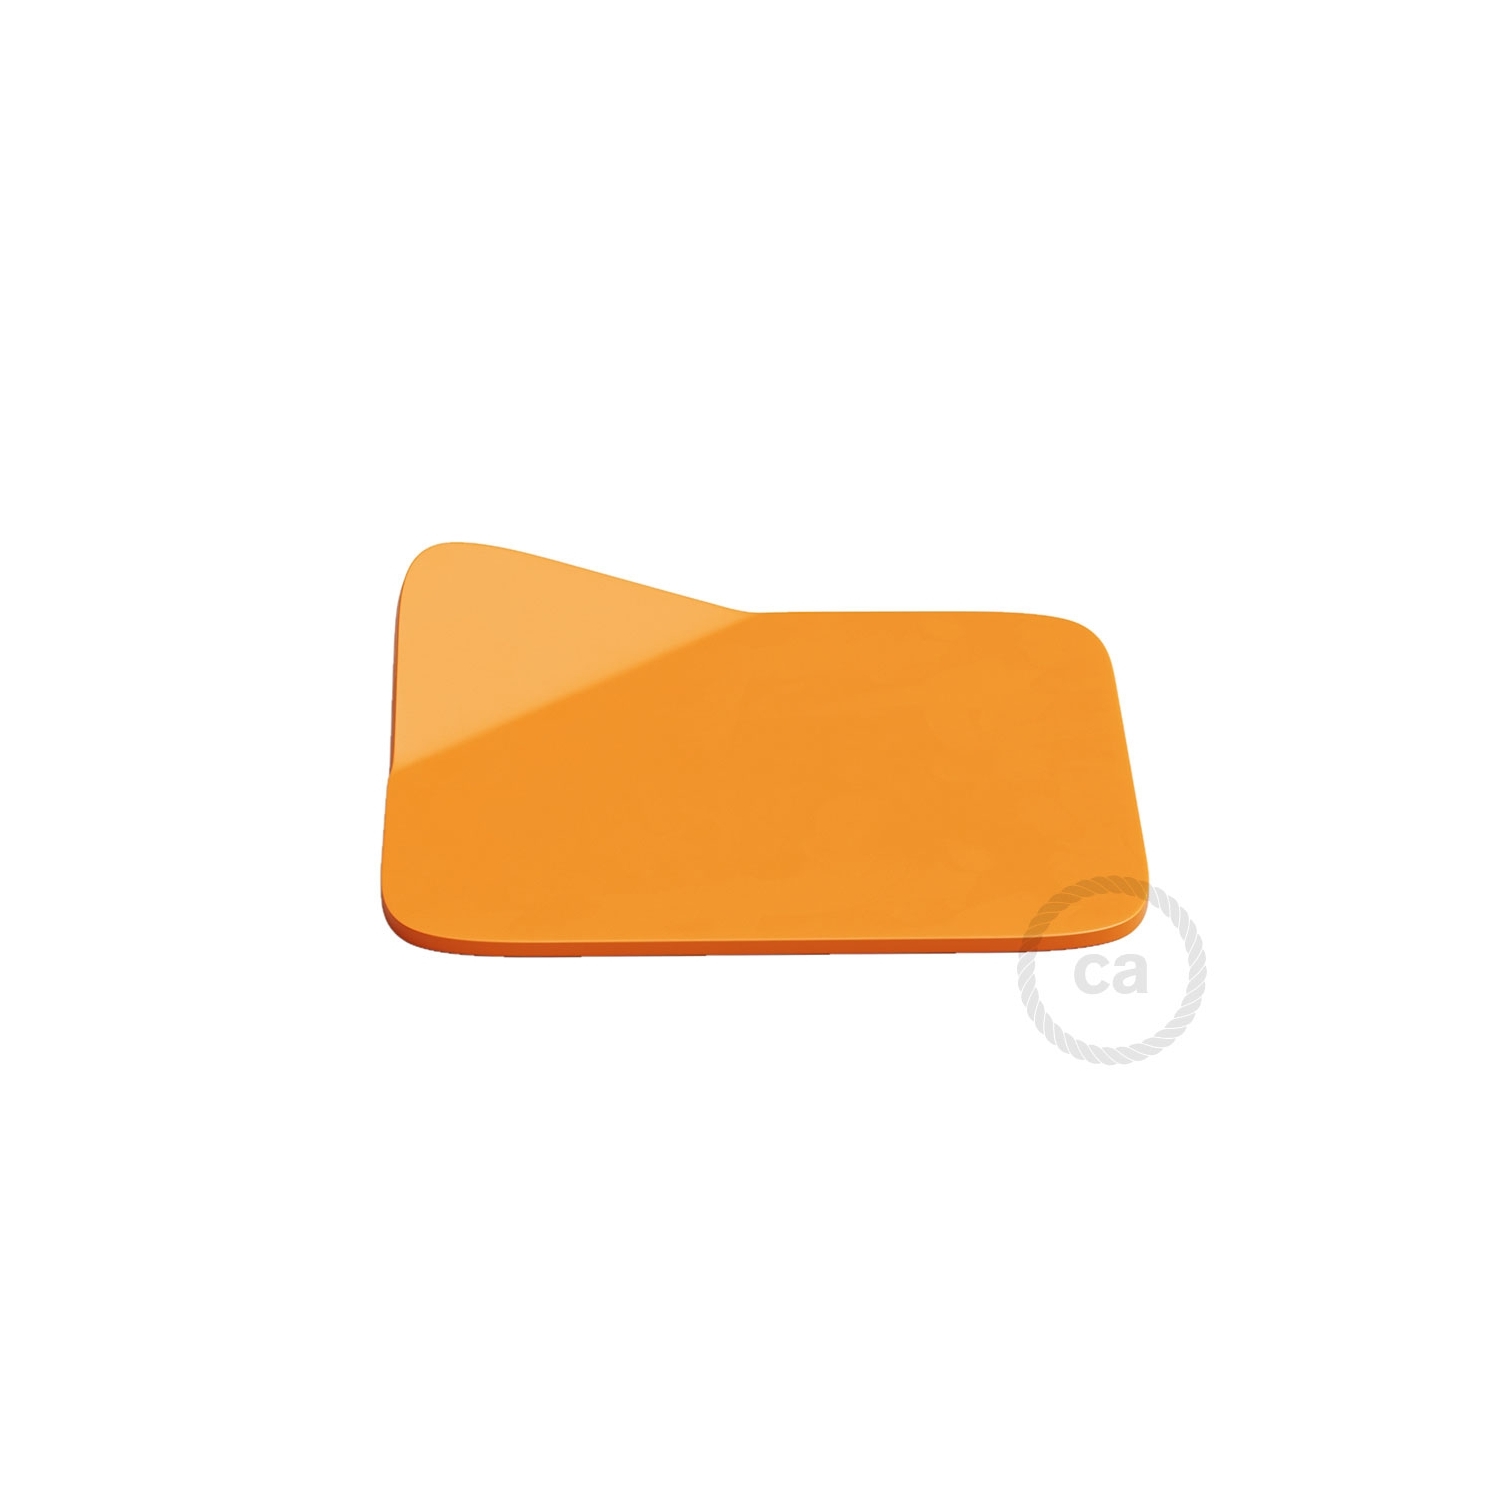 Magnetico®-Base Orange, metal base for smooth surfaces for Magnetico®-Plug